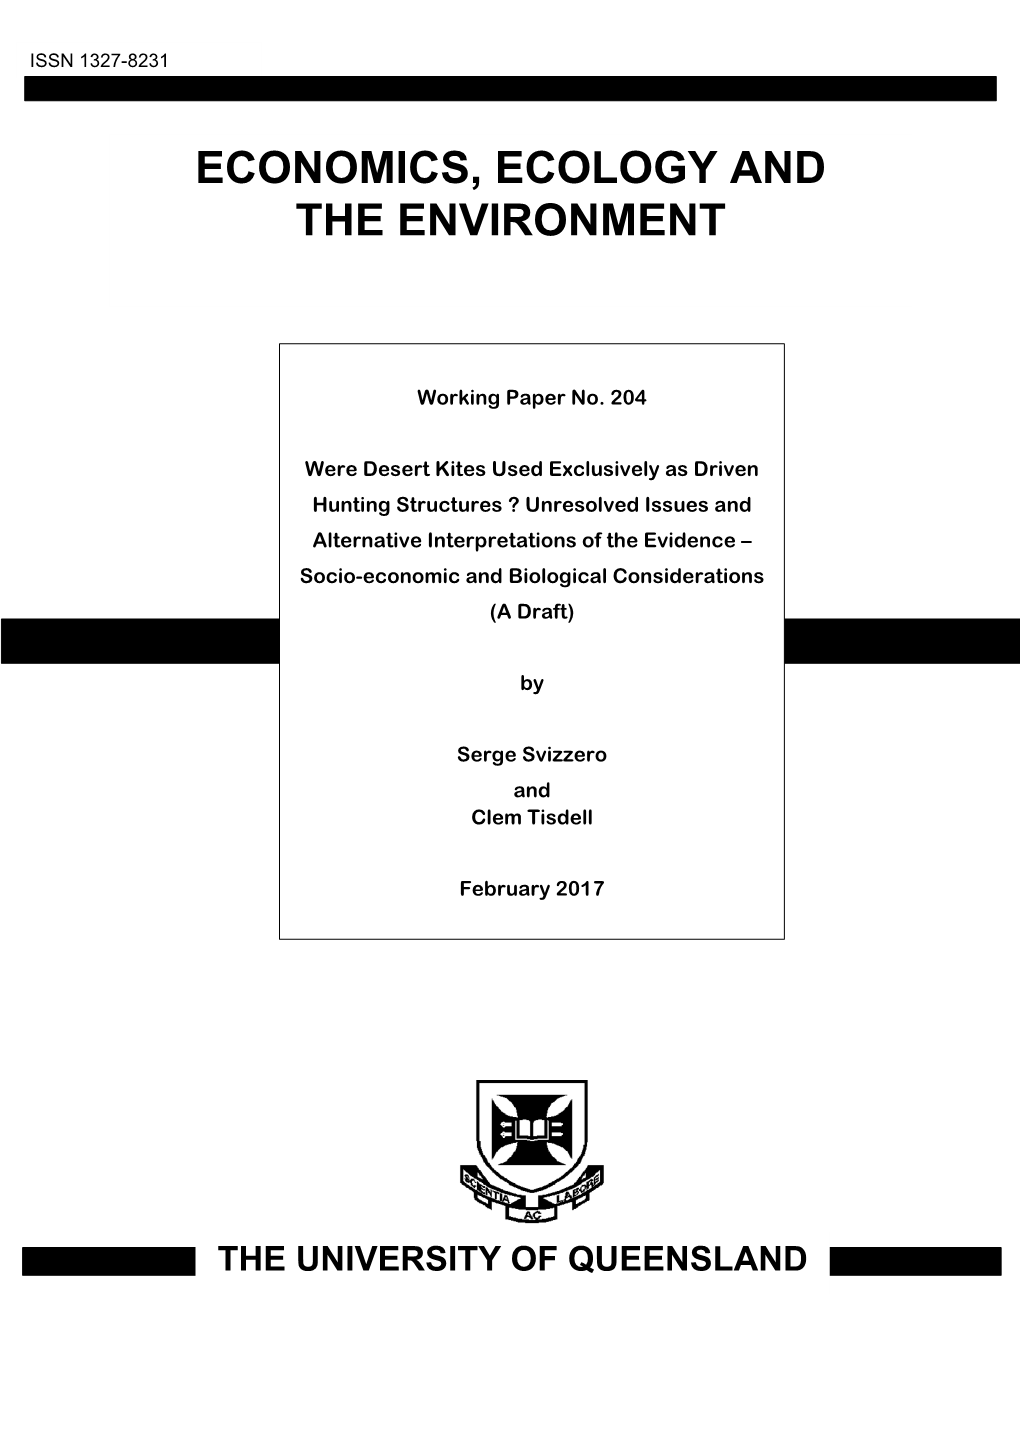 Economics, Ecology and the Environment